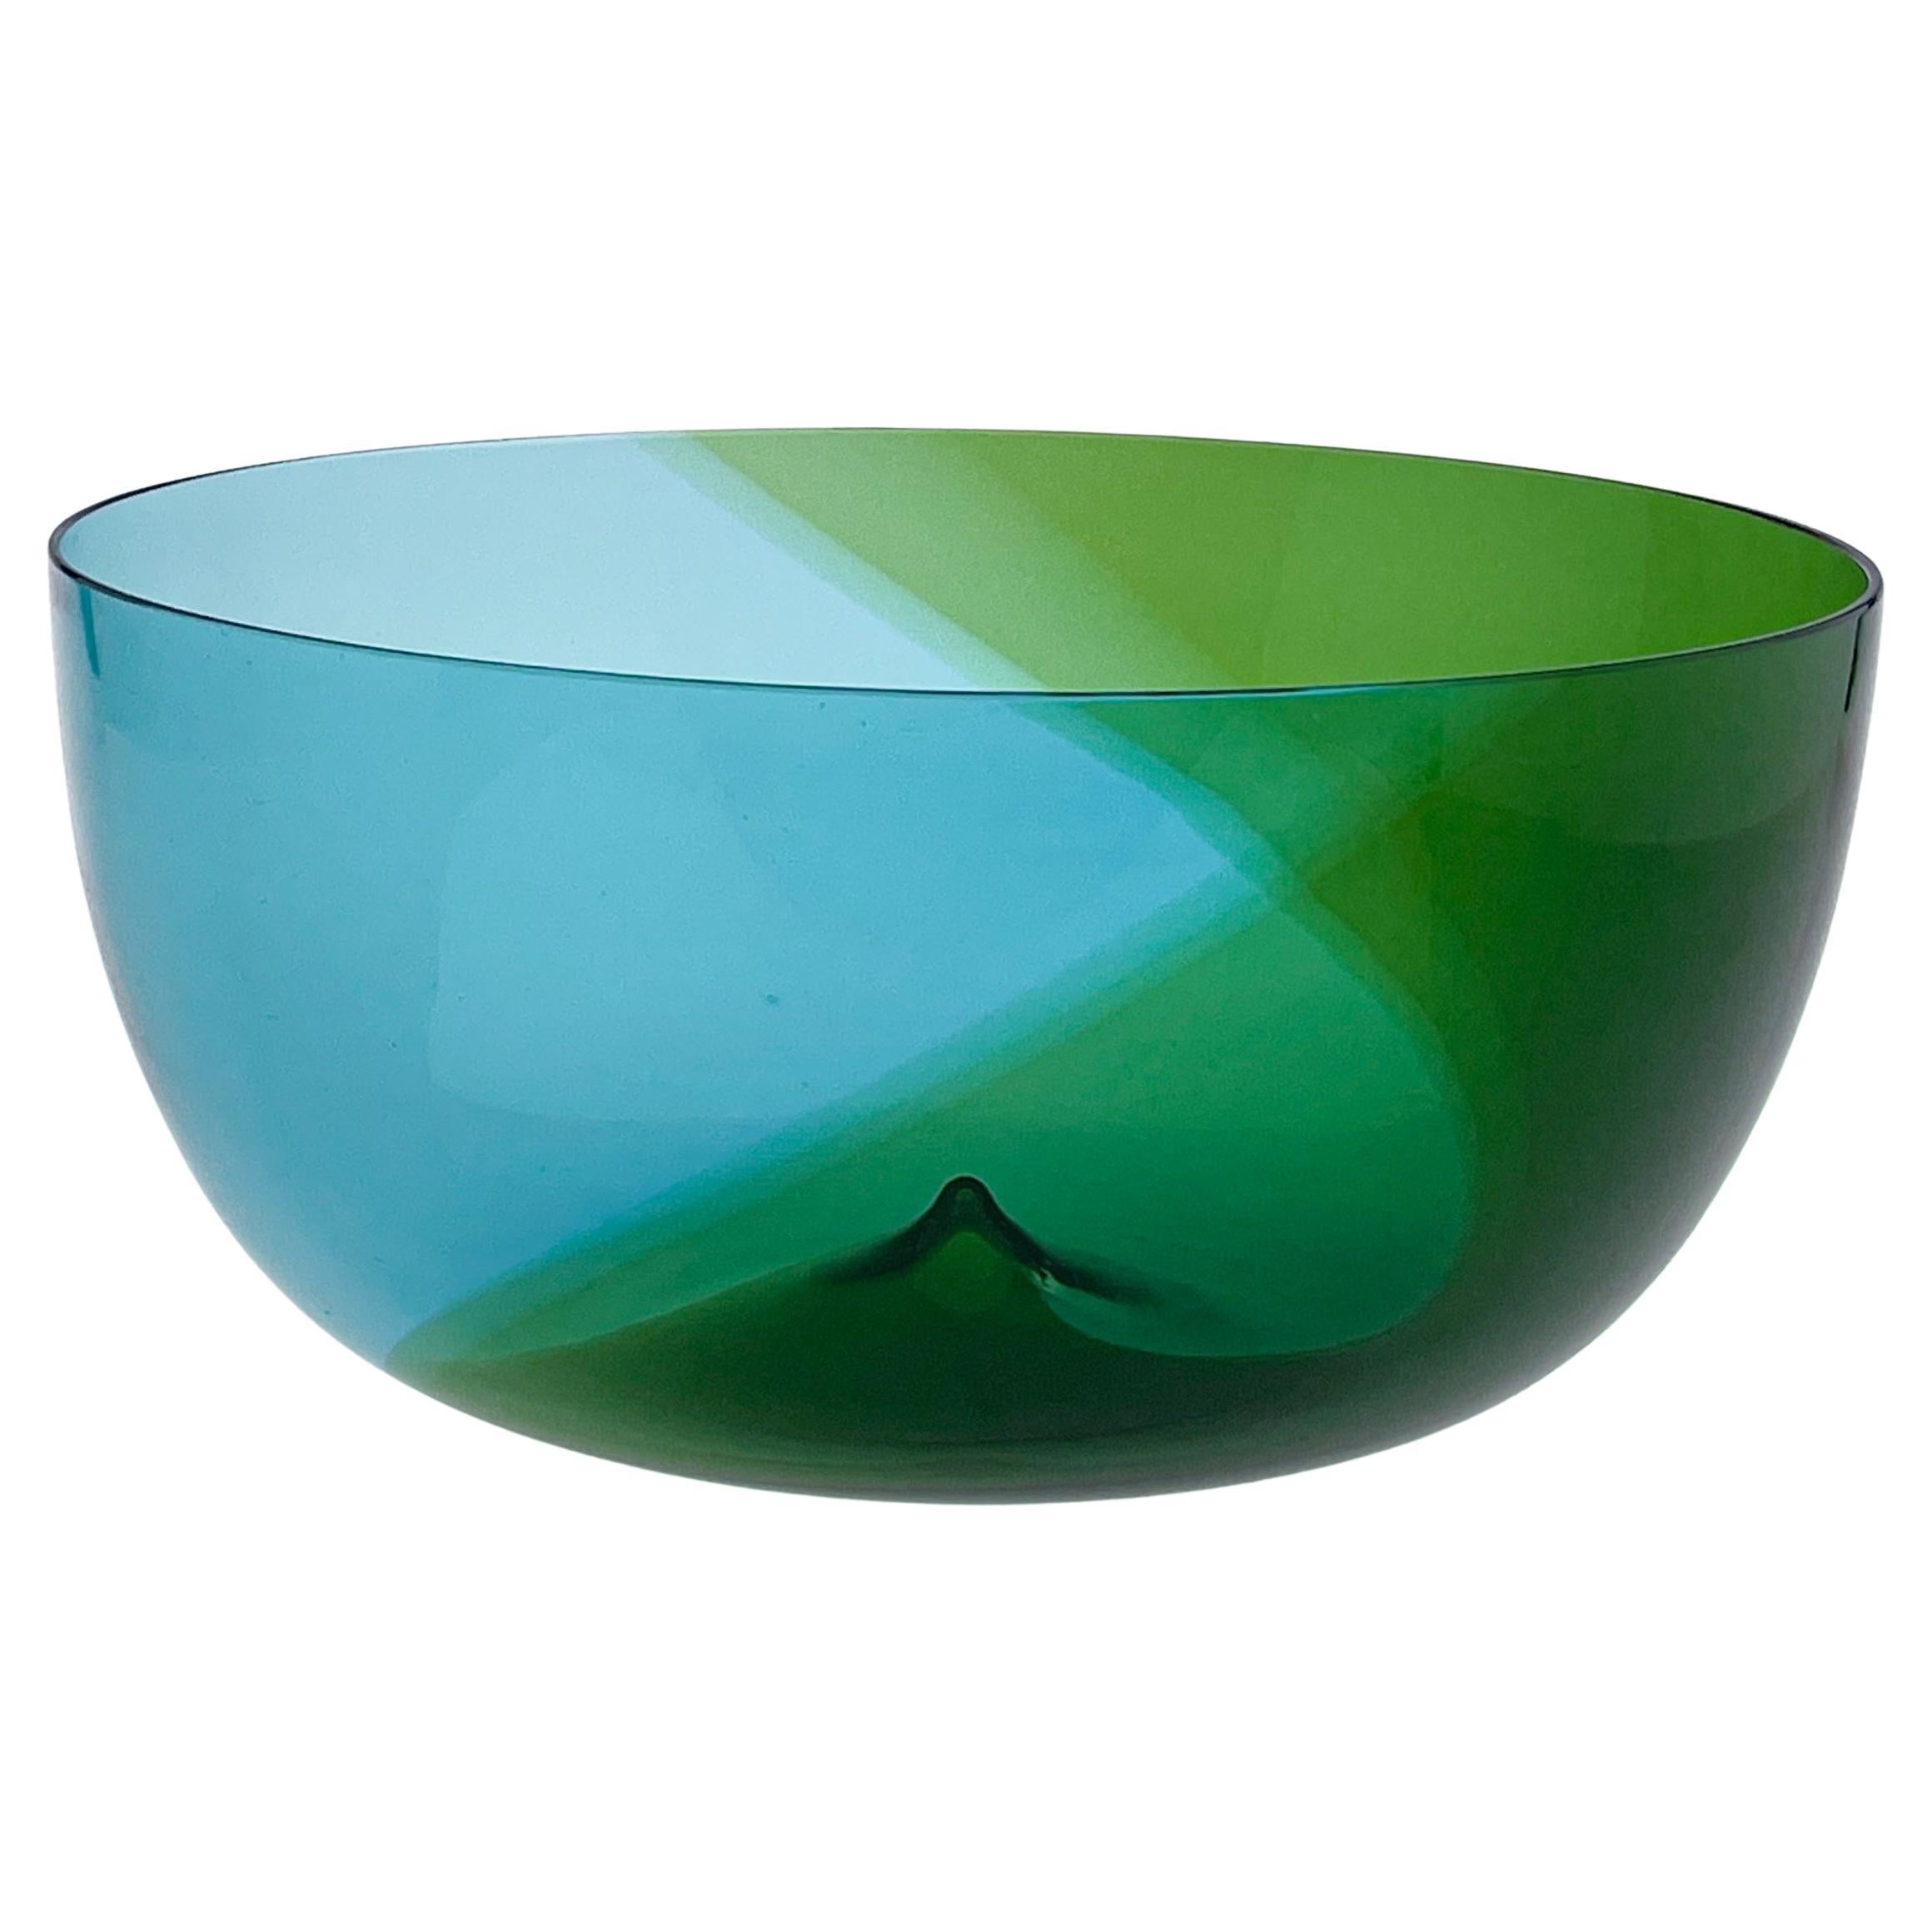 Murano Tapio Wirkkala Art Glass bowl "Coreano" green turquoise handblown Venini